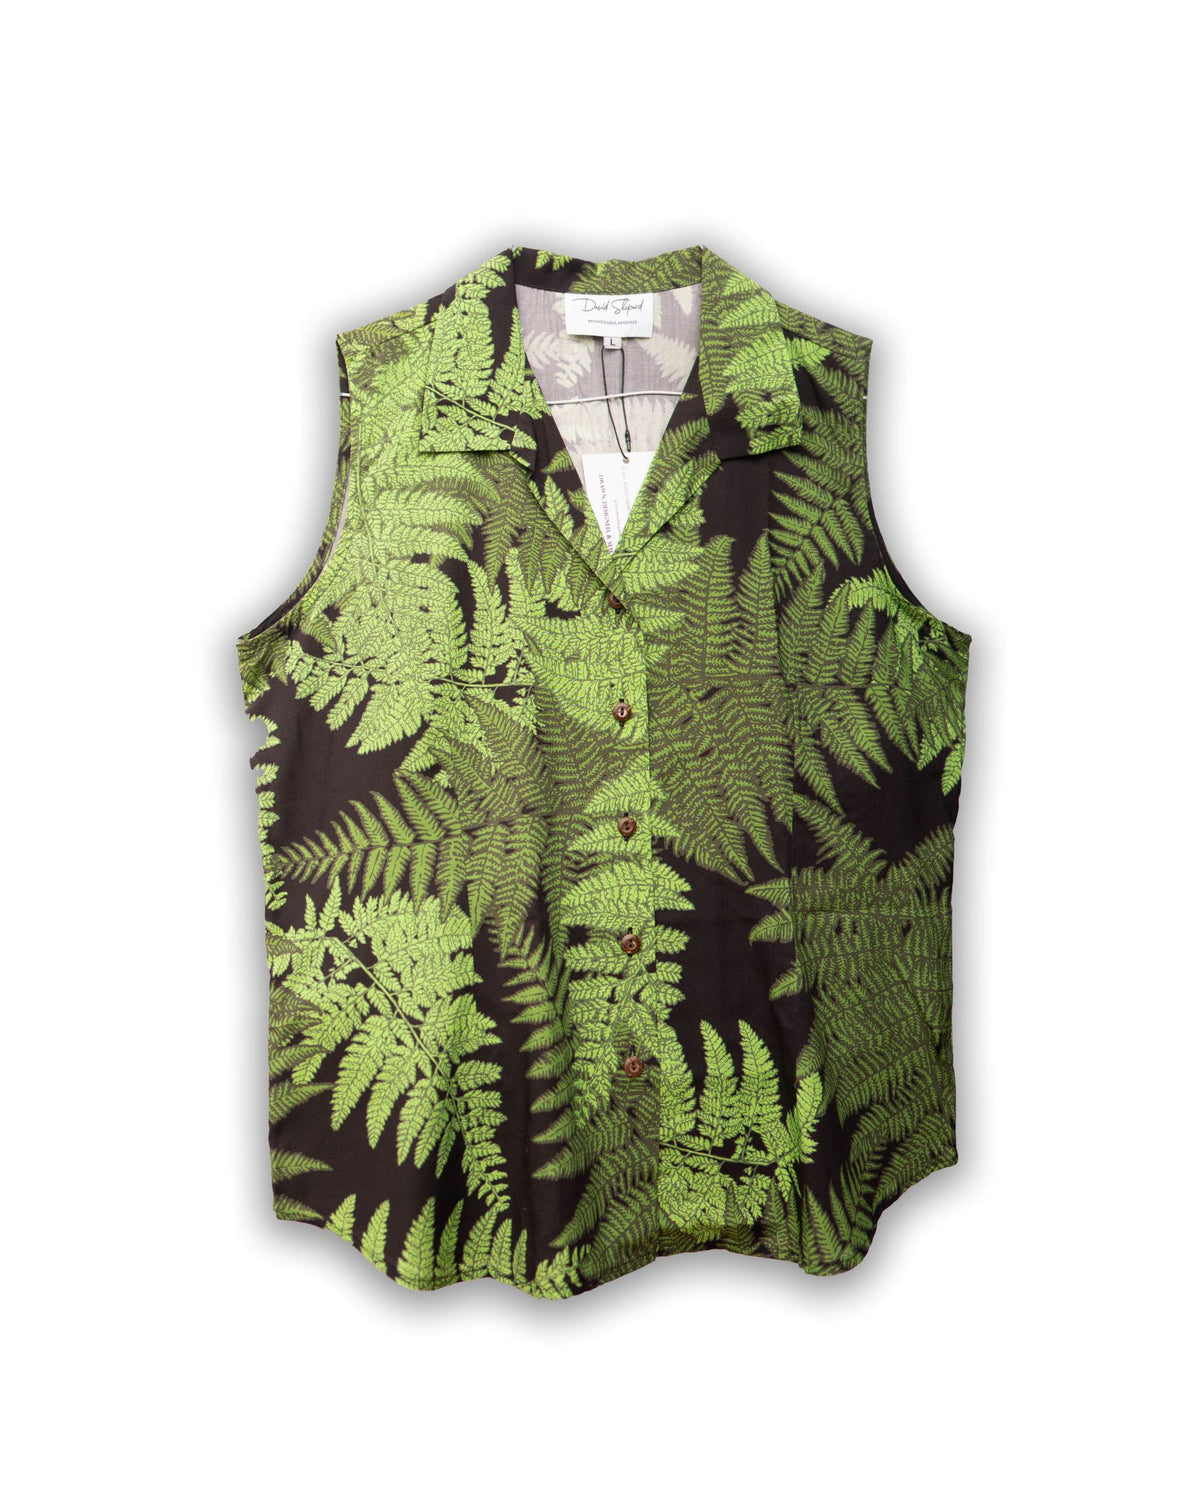 Pop-Up Mākeke - David Shepard Hawaii - Palapalai Fern Green Sleeveless Women&#39;s Aloha Shirt - Front View